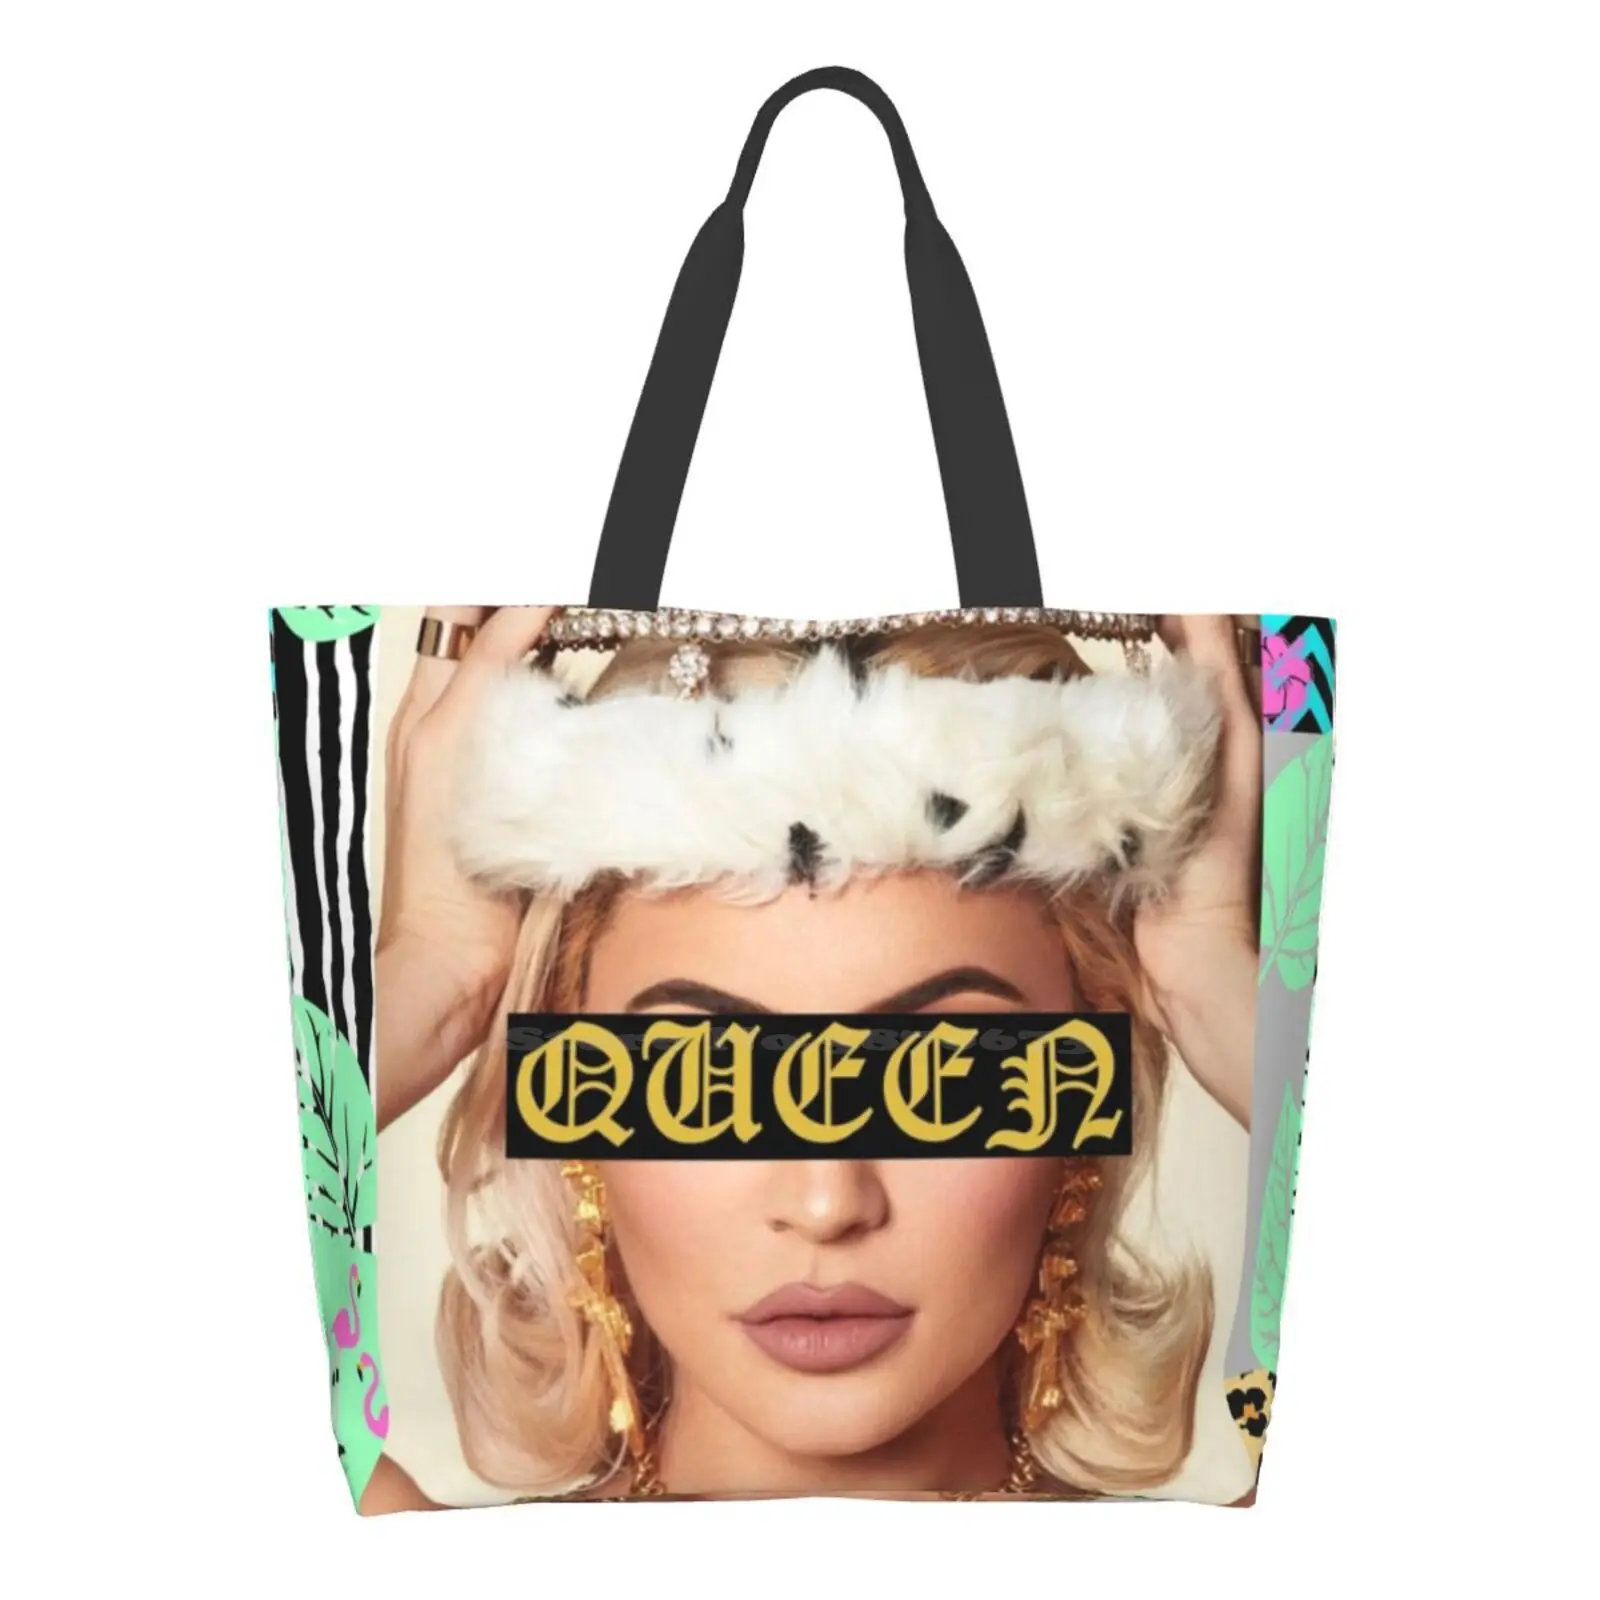 

Queen Graffiti Designer Handbags Shopping Tote Keeping Up With The Kardashians Kardashians Billion Dollar Kylie Cosmetics Rise